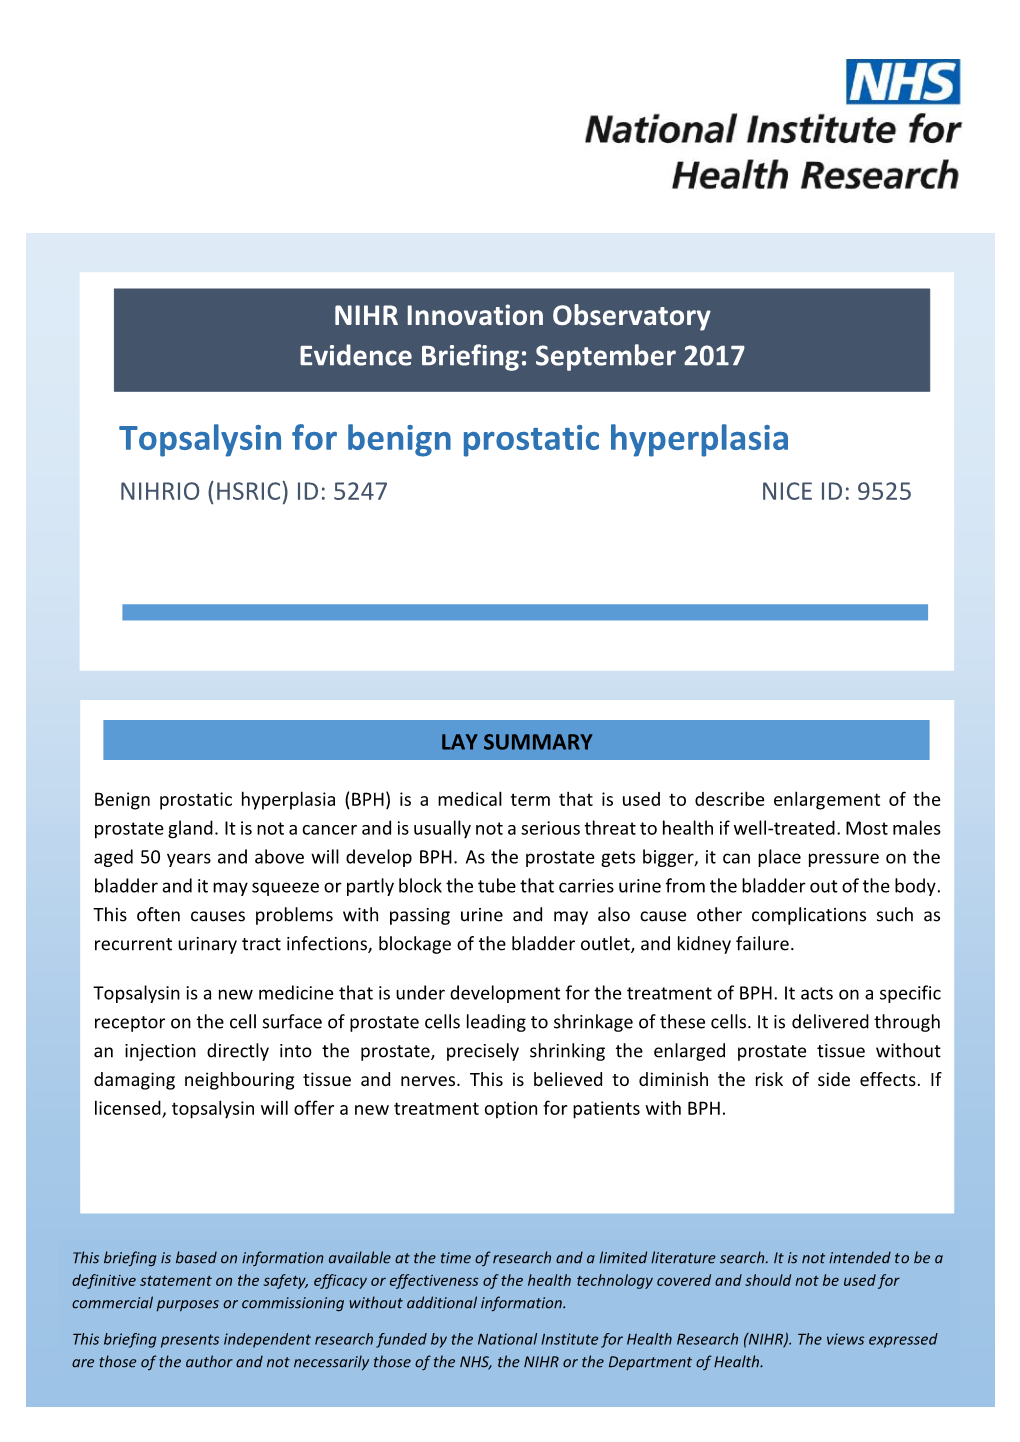 Topsalysin for Benign Prostatic Hyperplasia NIHRIO (HSRIC) ID: 5247 NICE ID: 9525